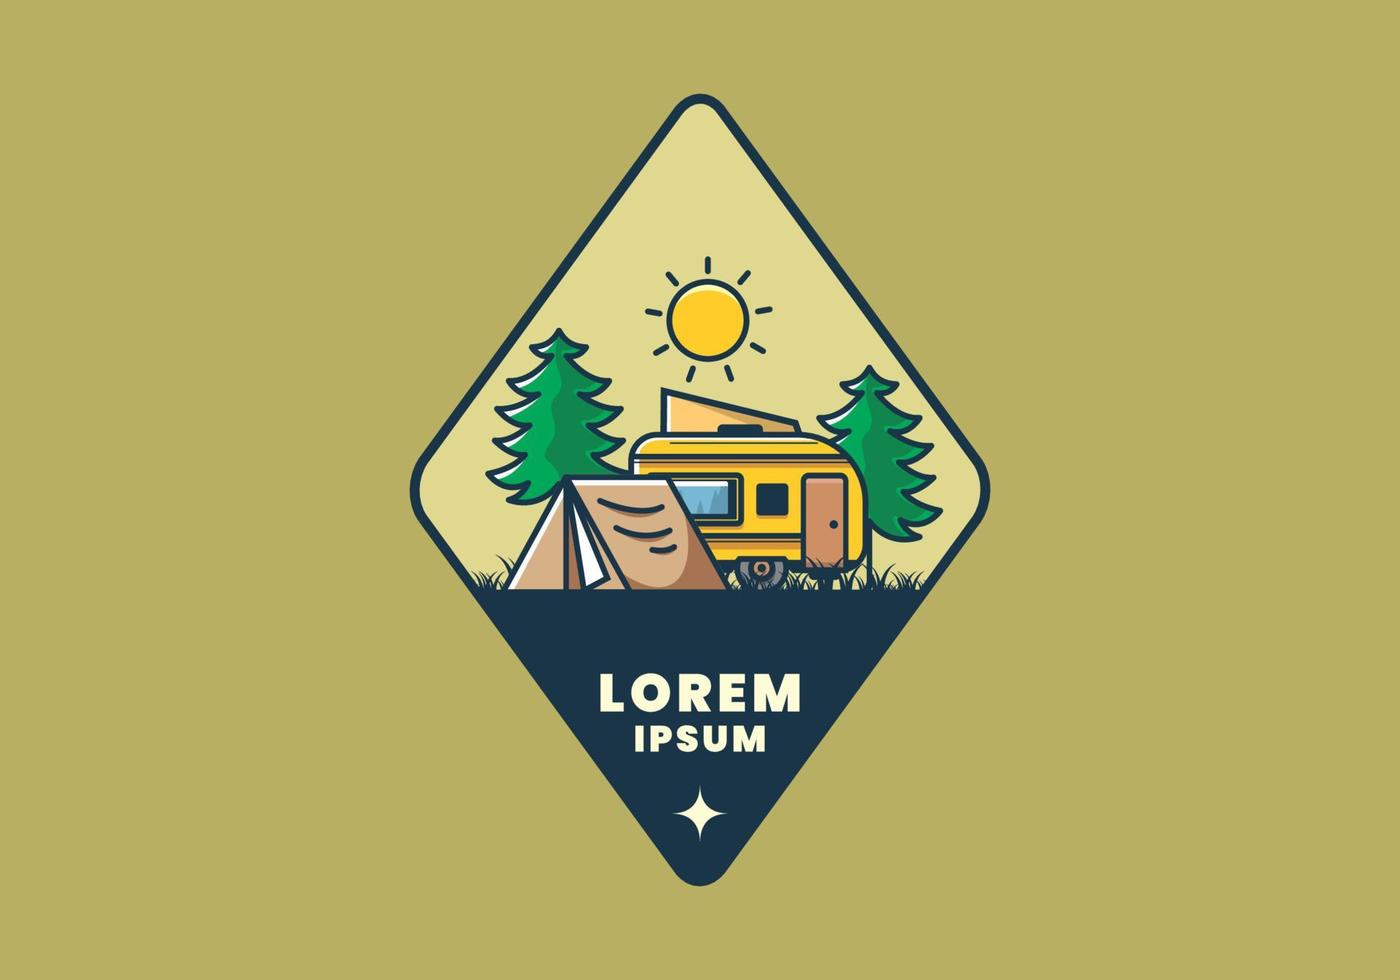 Camping van and tent between pine trees illustration vector